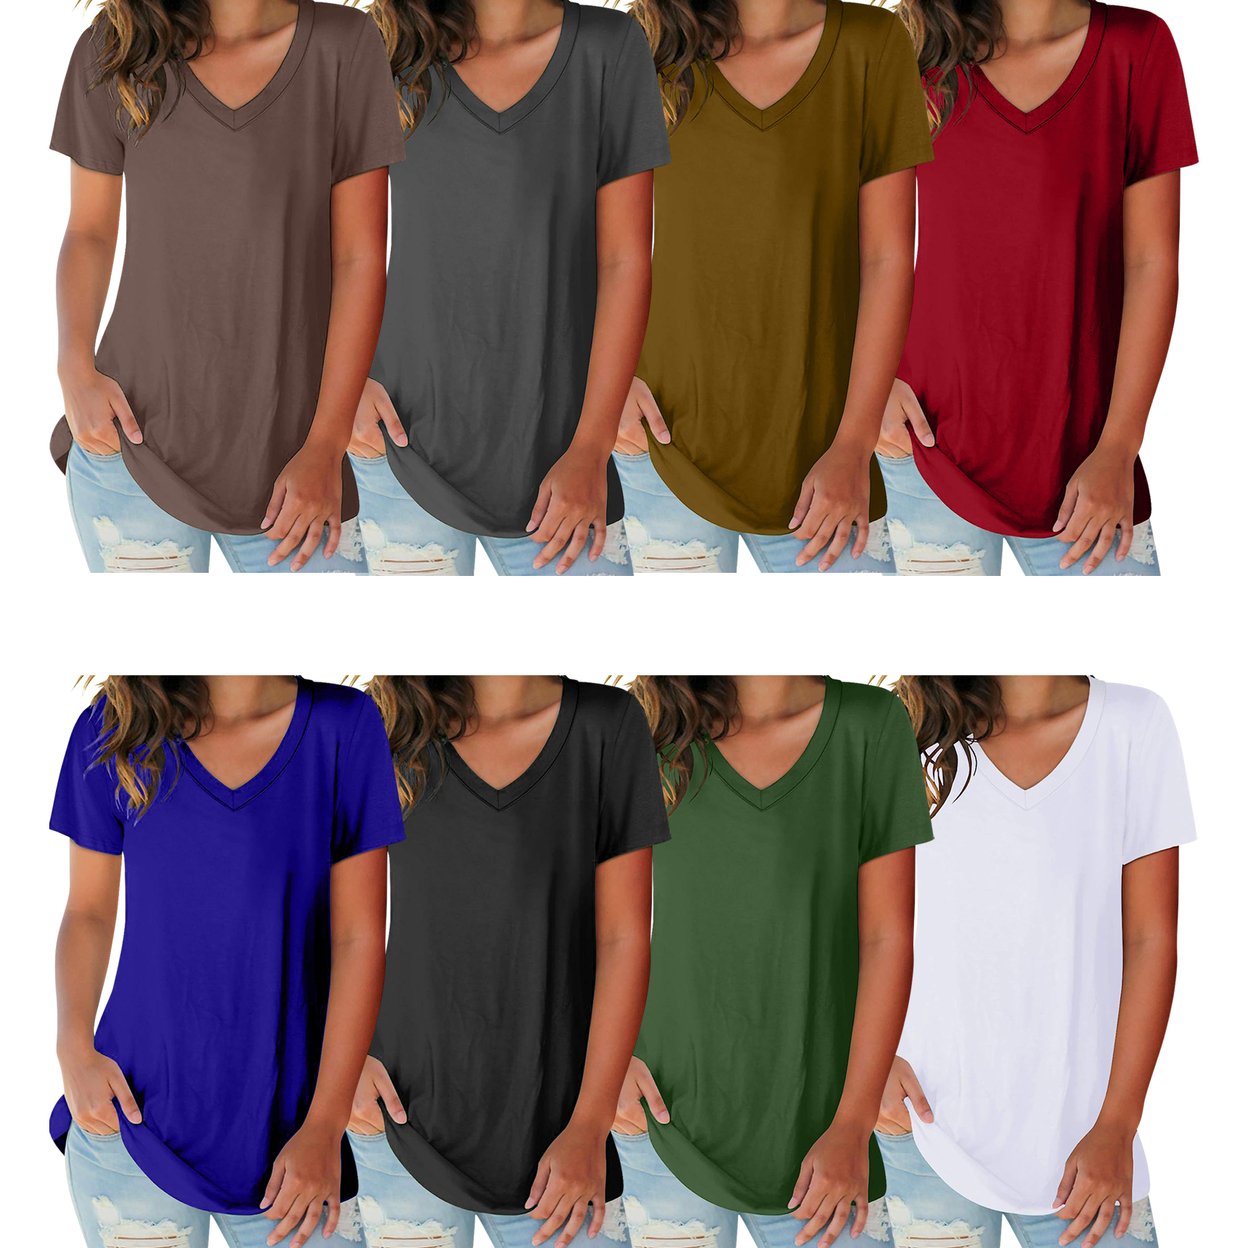 4-Pack: Women's Ultra Soft Smooth Cotton Blend Basic V-Neck Short Sleeve Shirts - Large